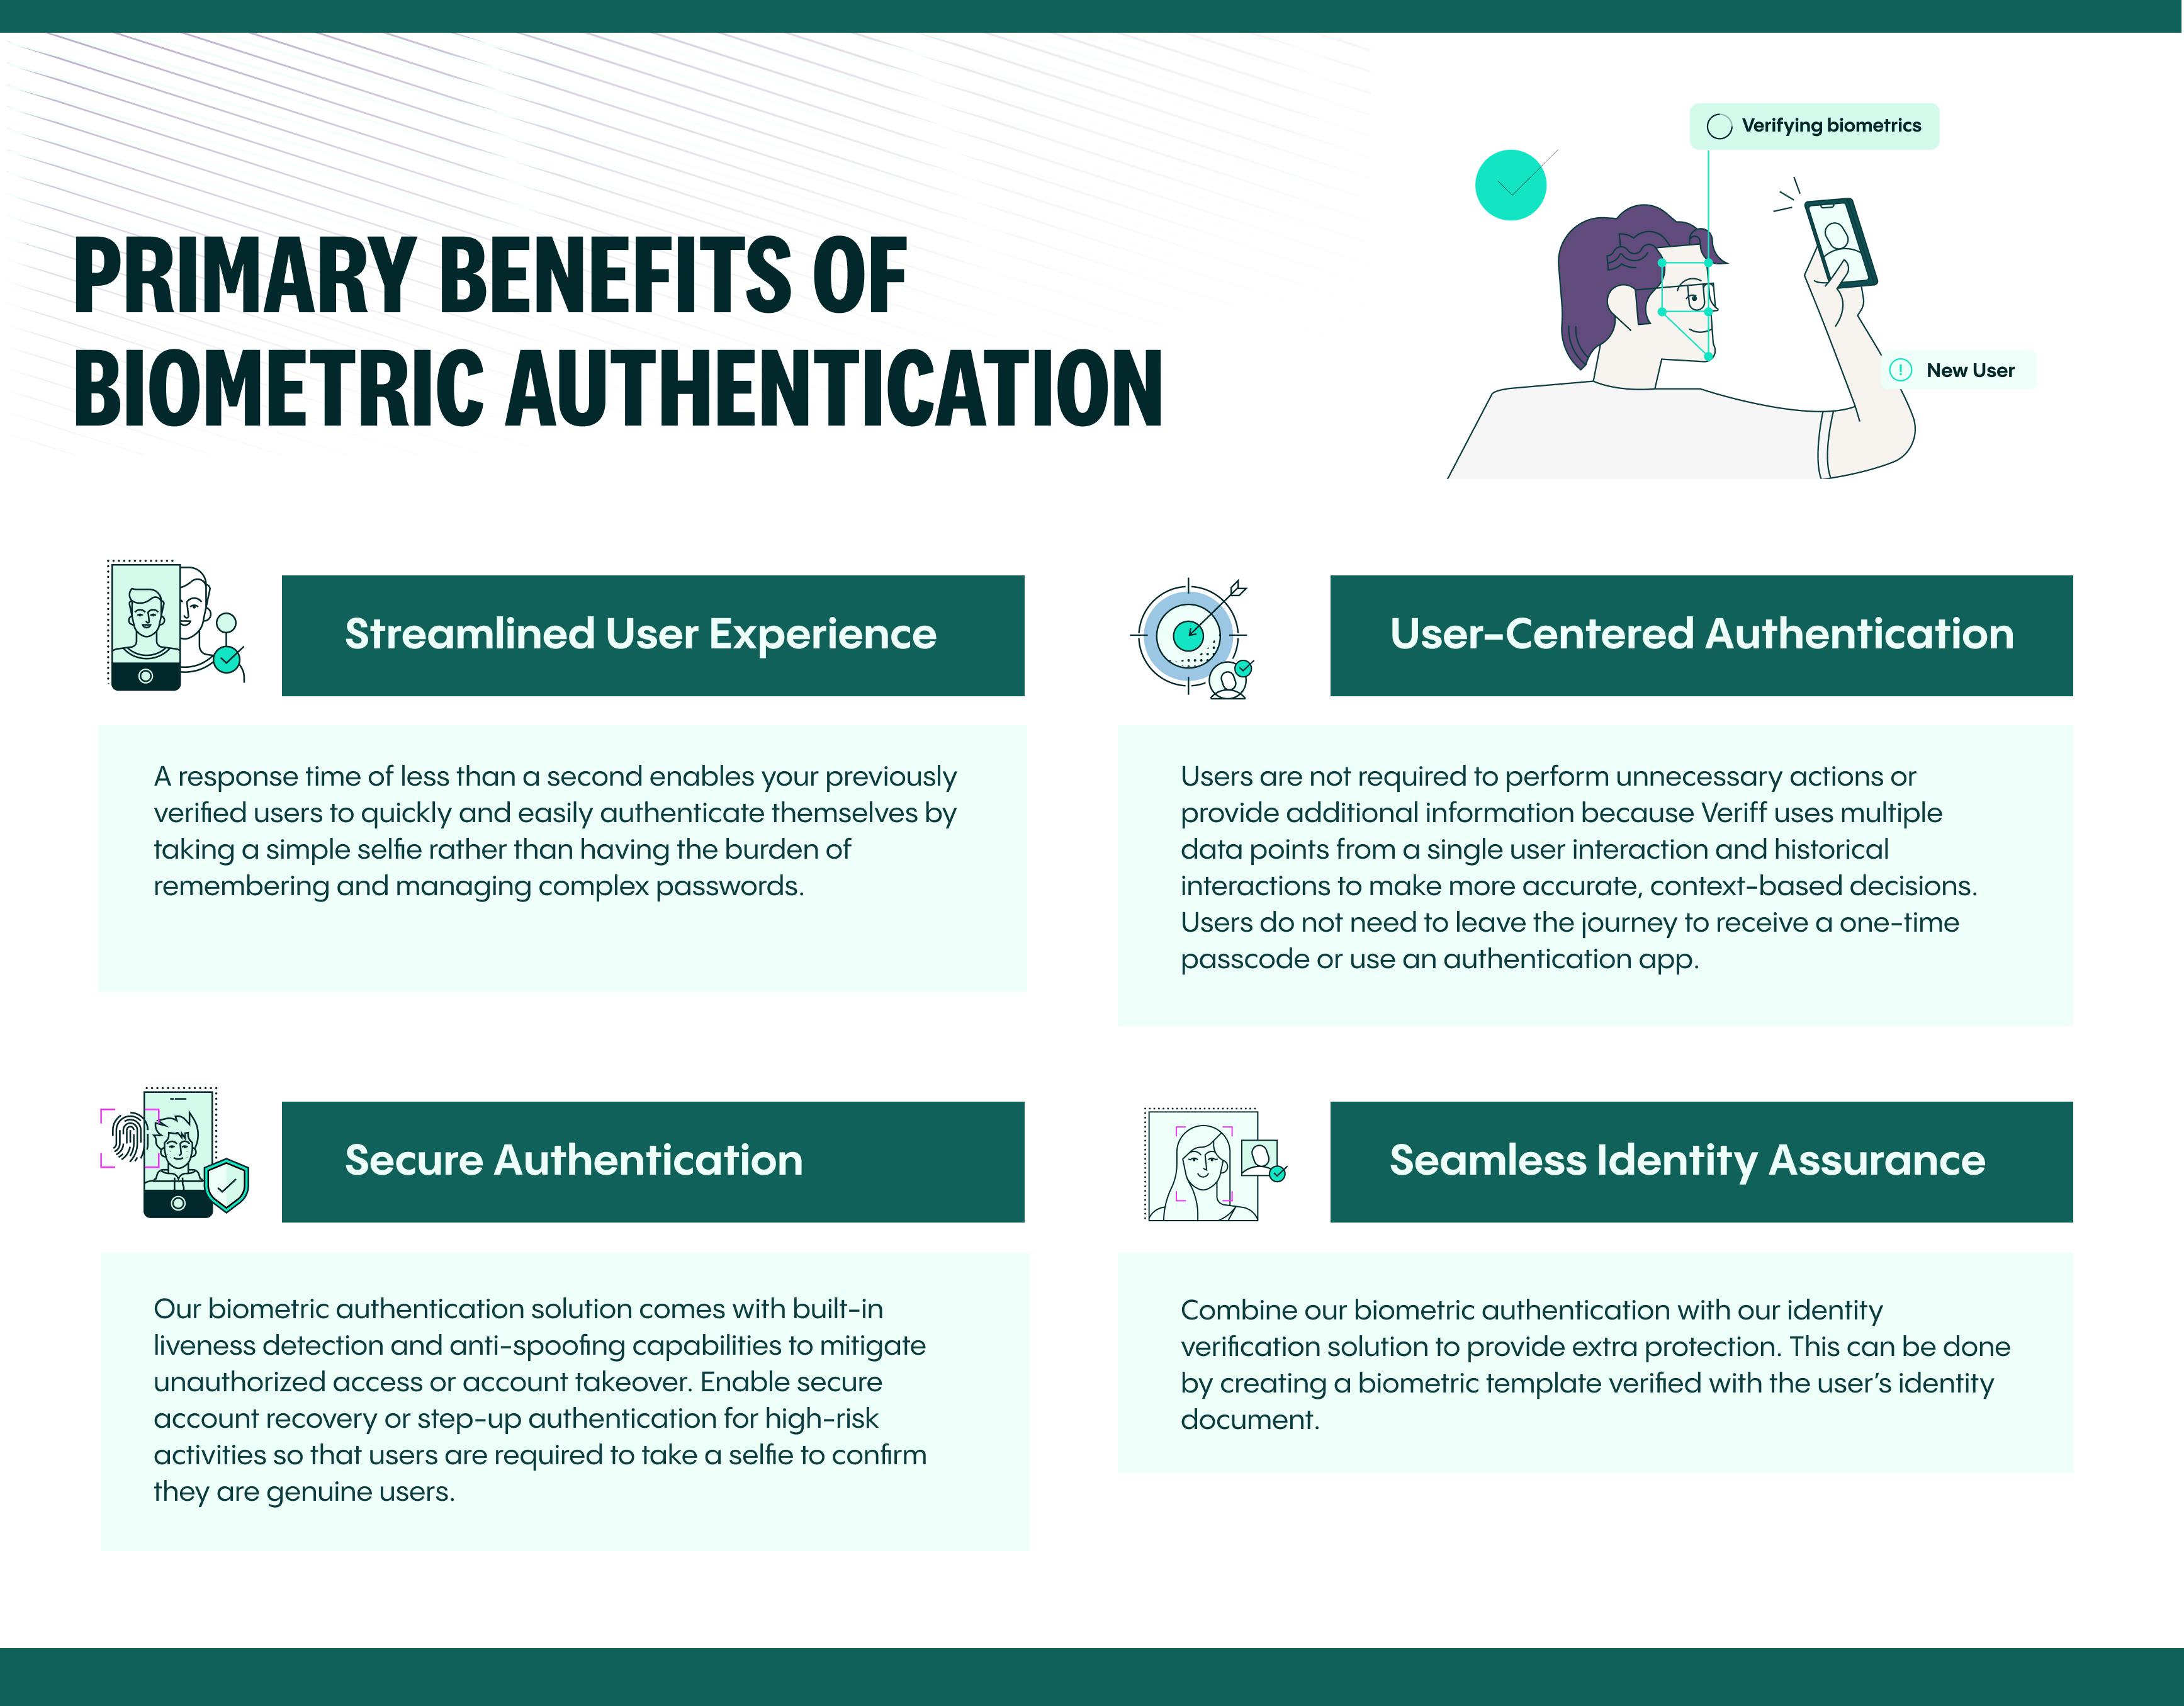 Primary Benefits of Biometric Authentication